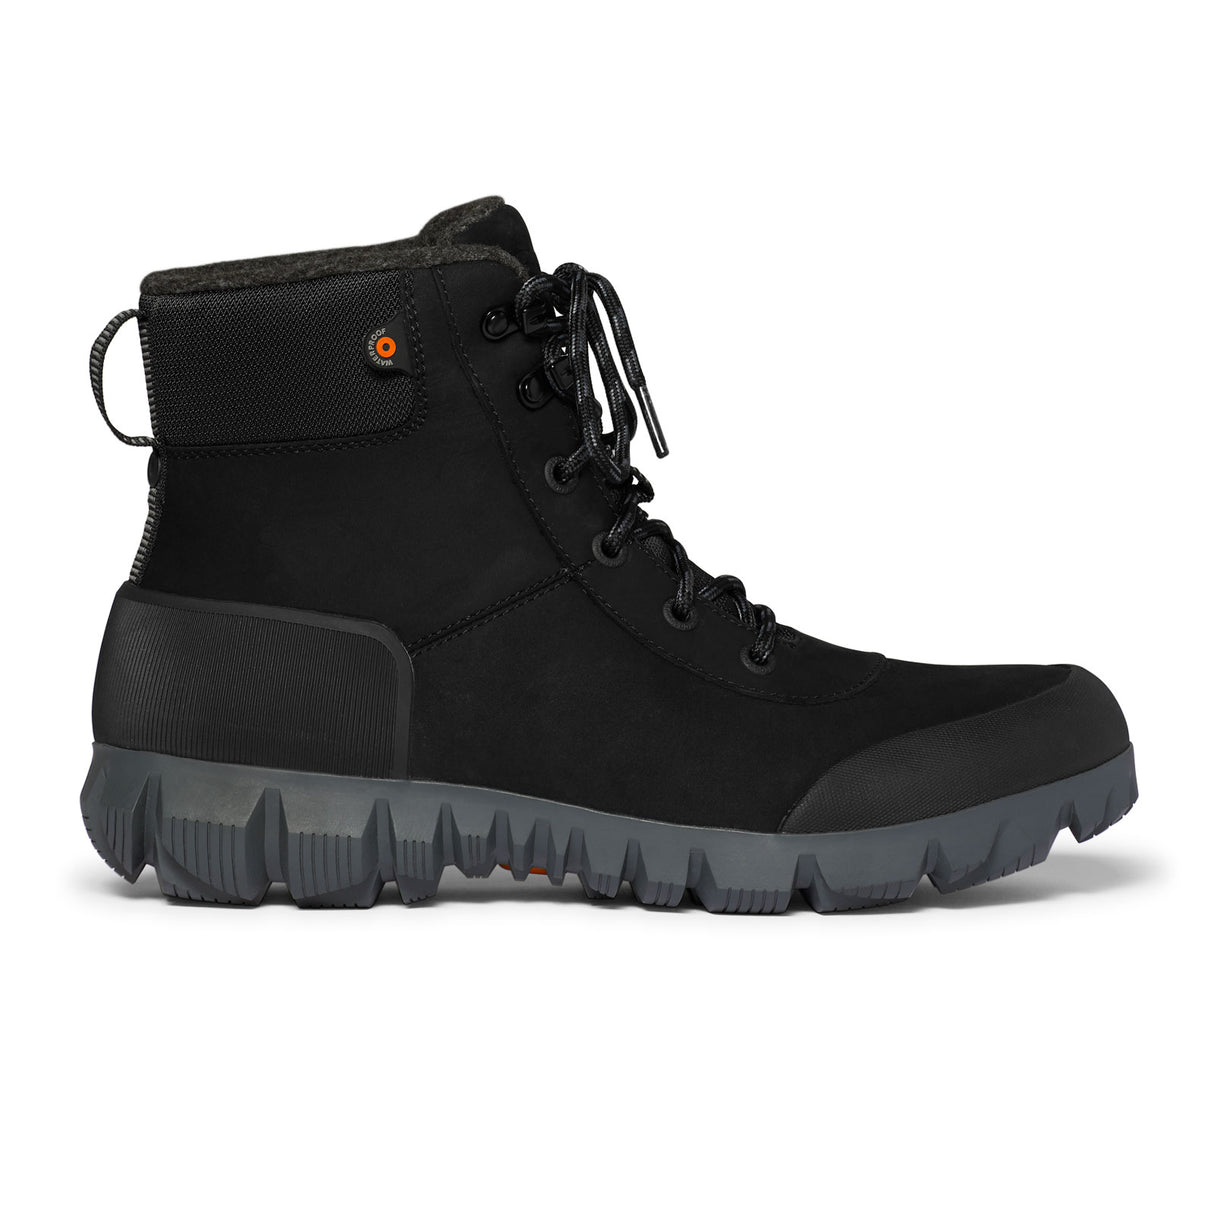 Bogs Men's Arcata Urban Leather Mid Boot - 9 - Black